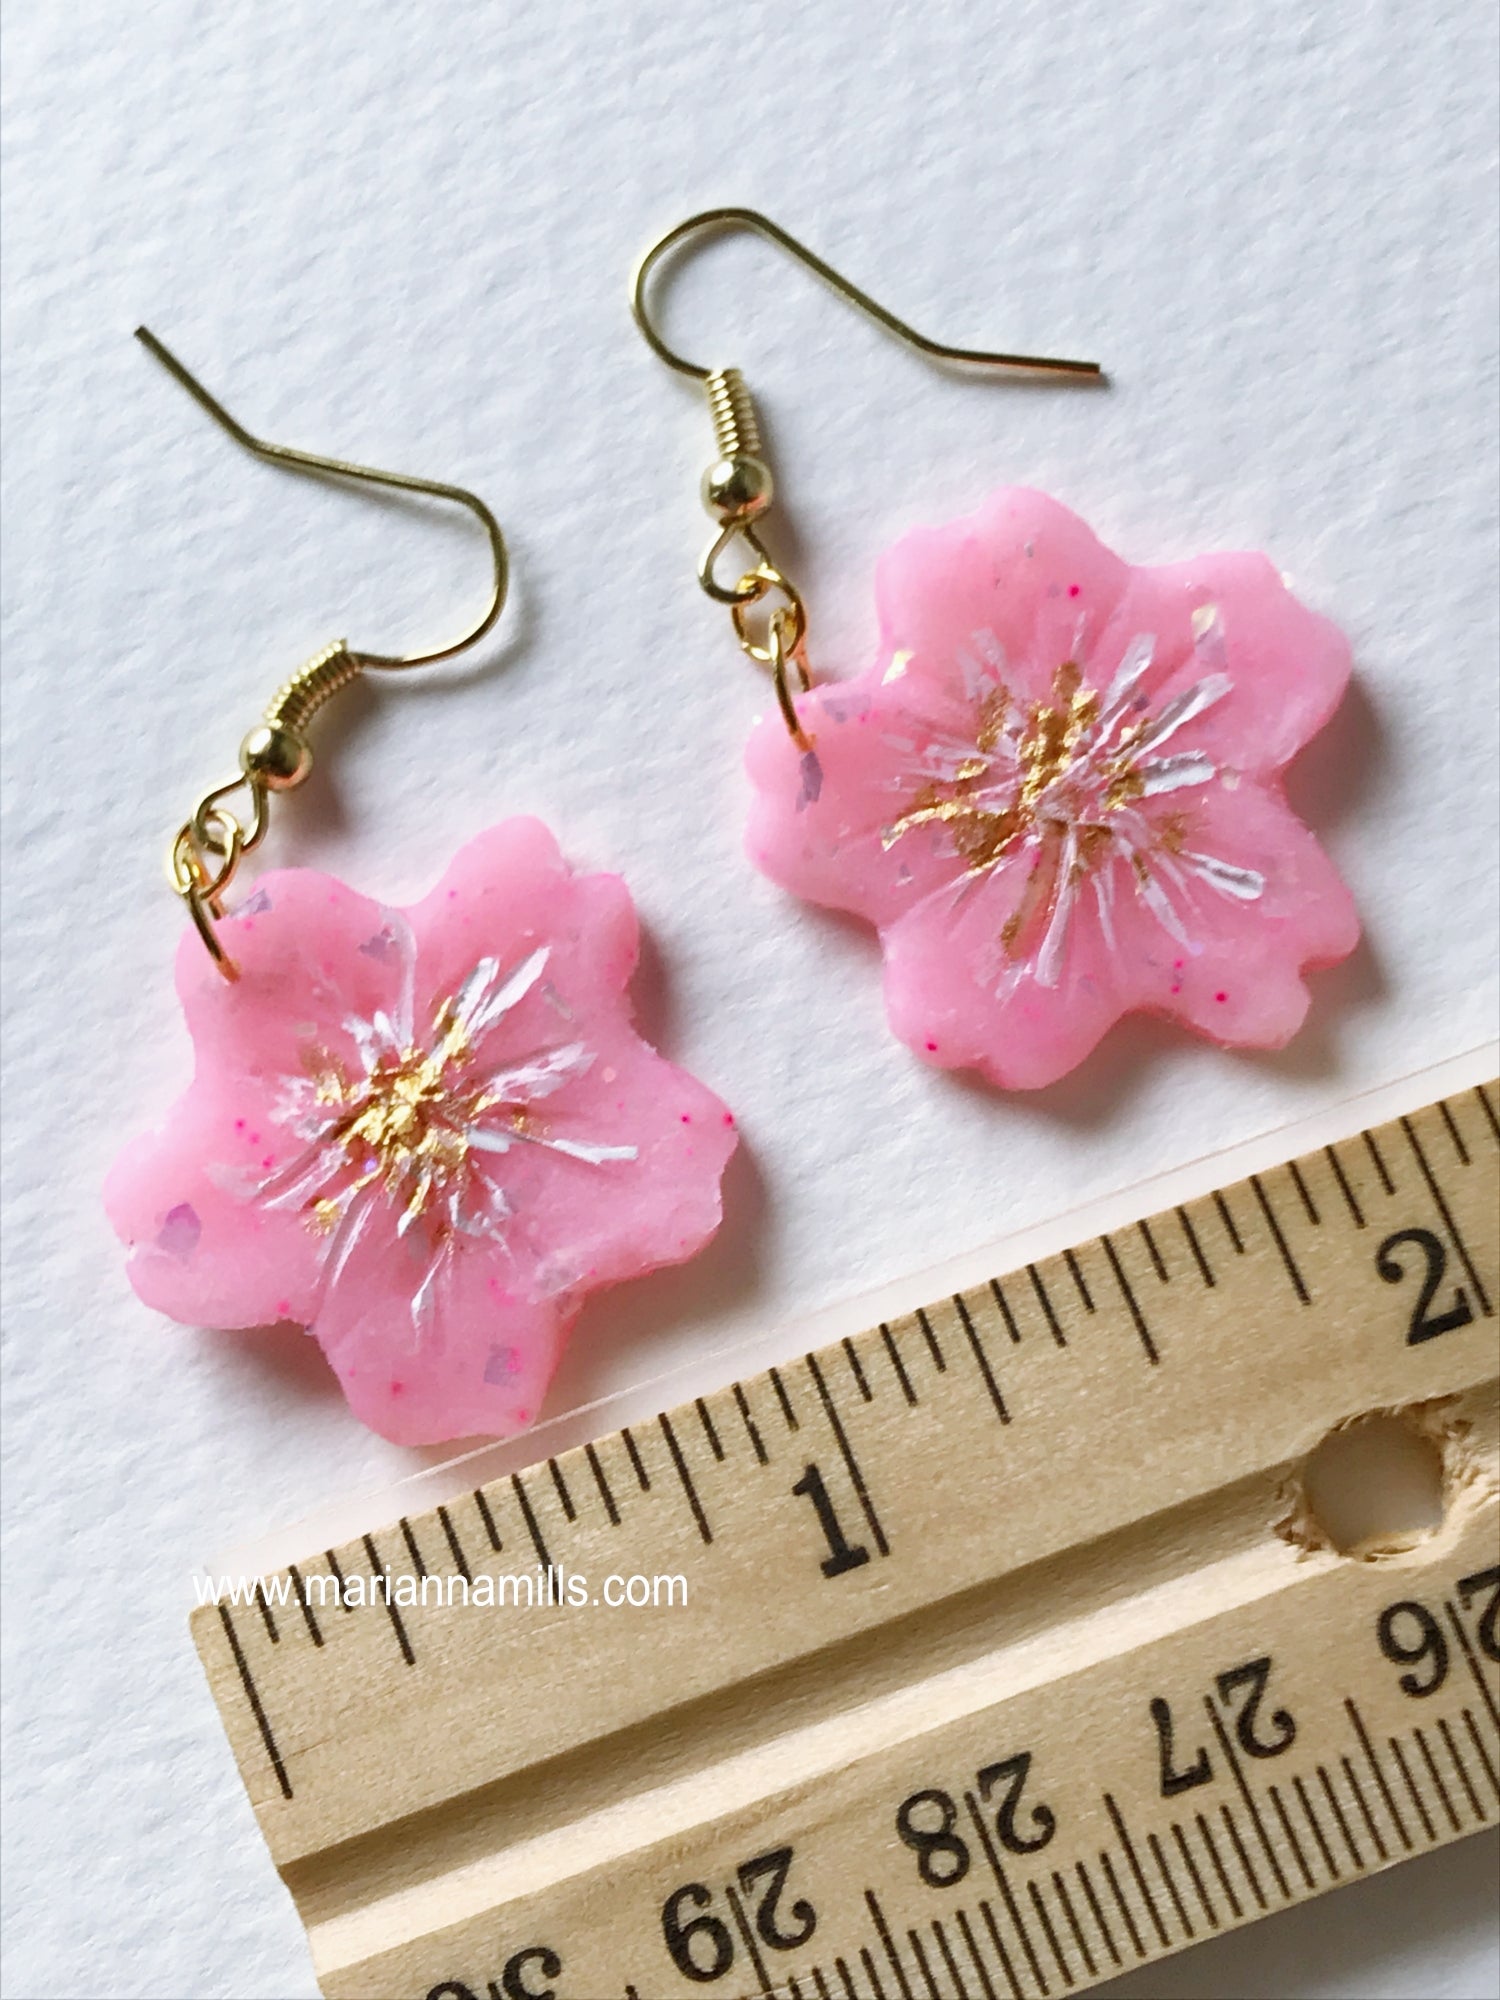 Sakura - Artisan Statement Earrings Handmade by Marianna Mills